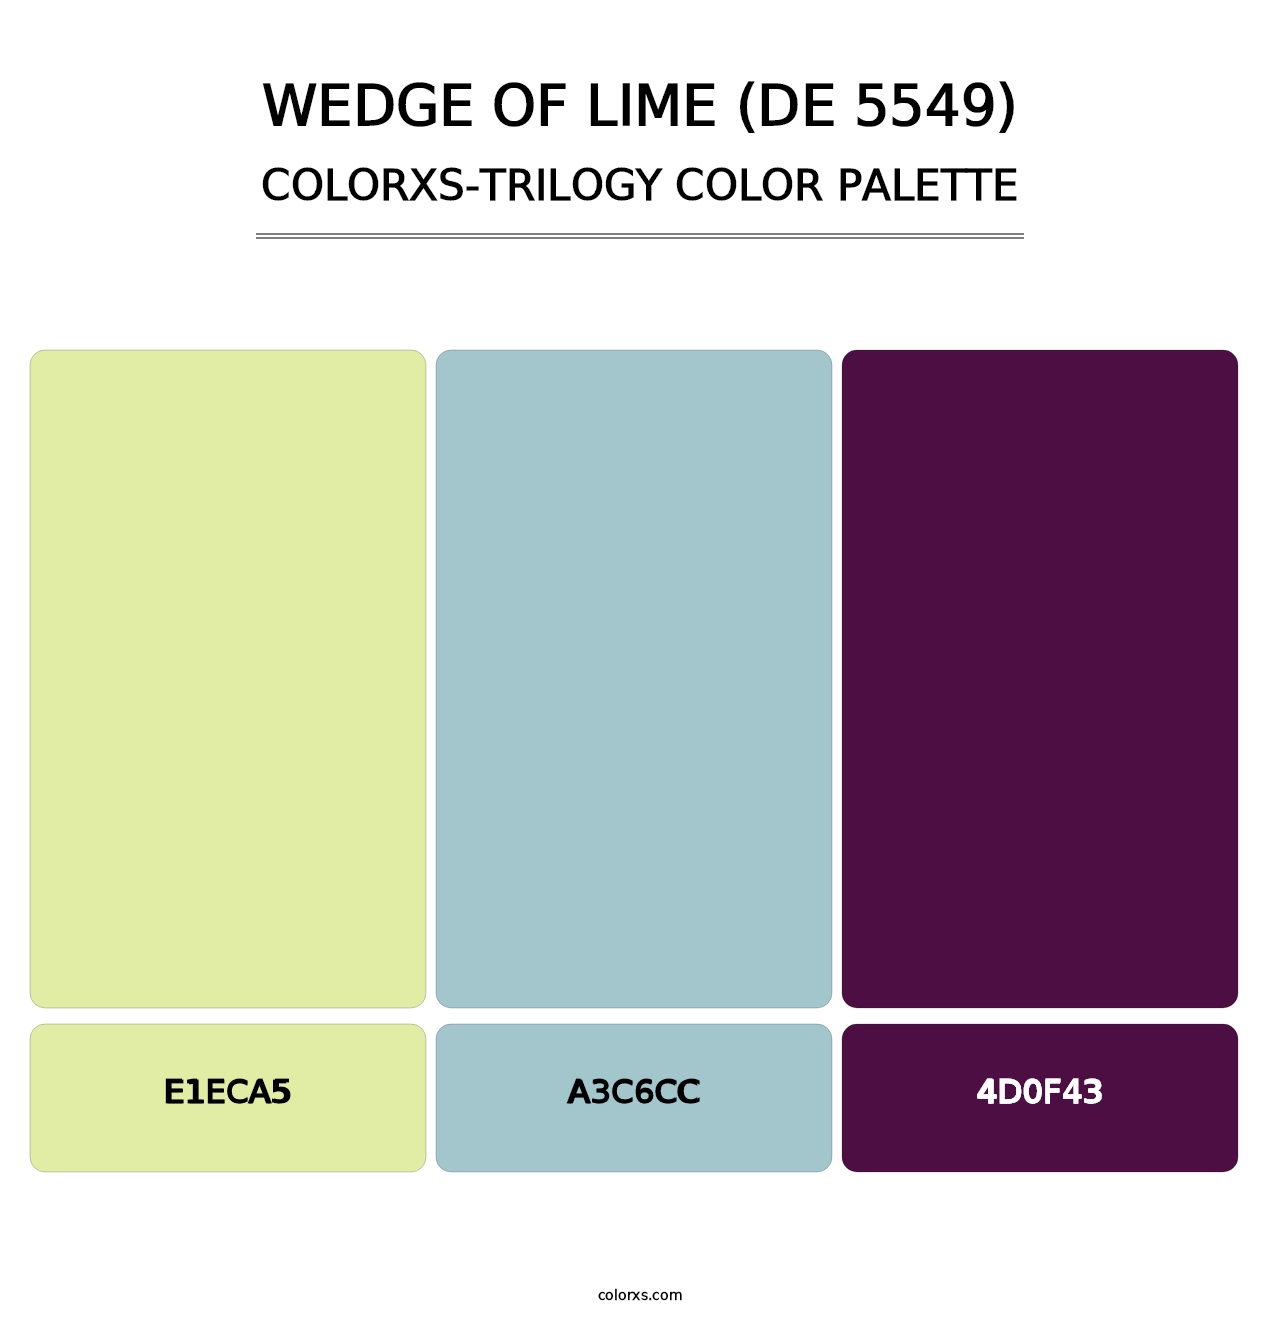 Wedge of Lime (DE 5549) - Colorxs Trilogy Palette